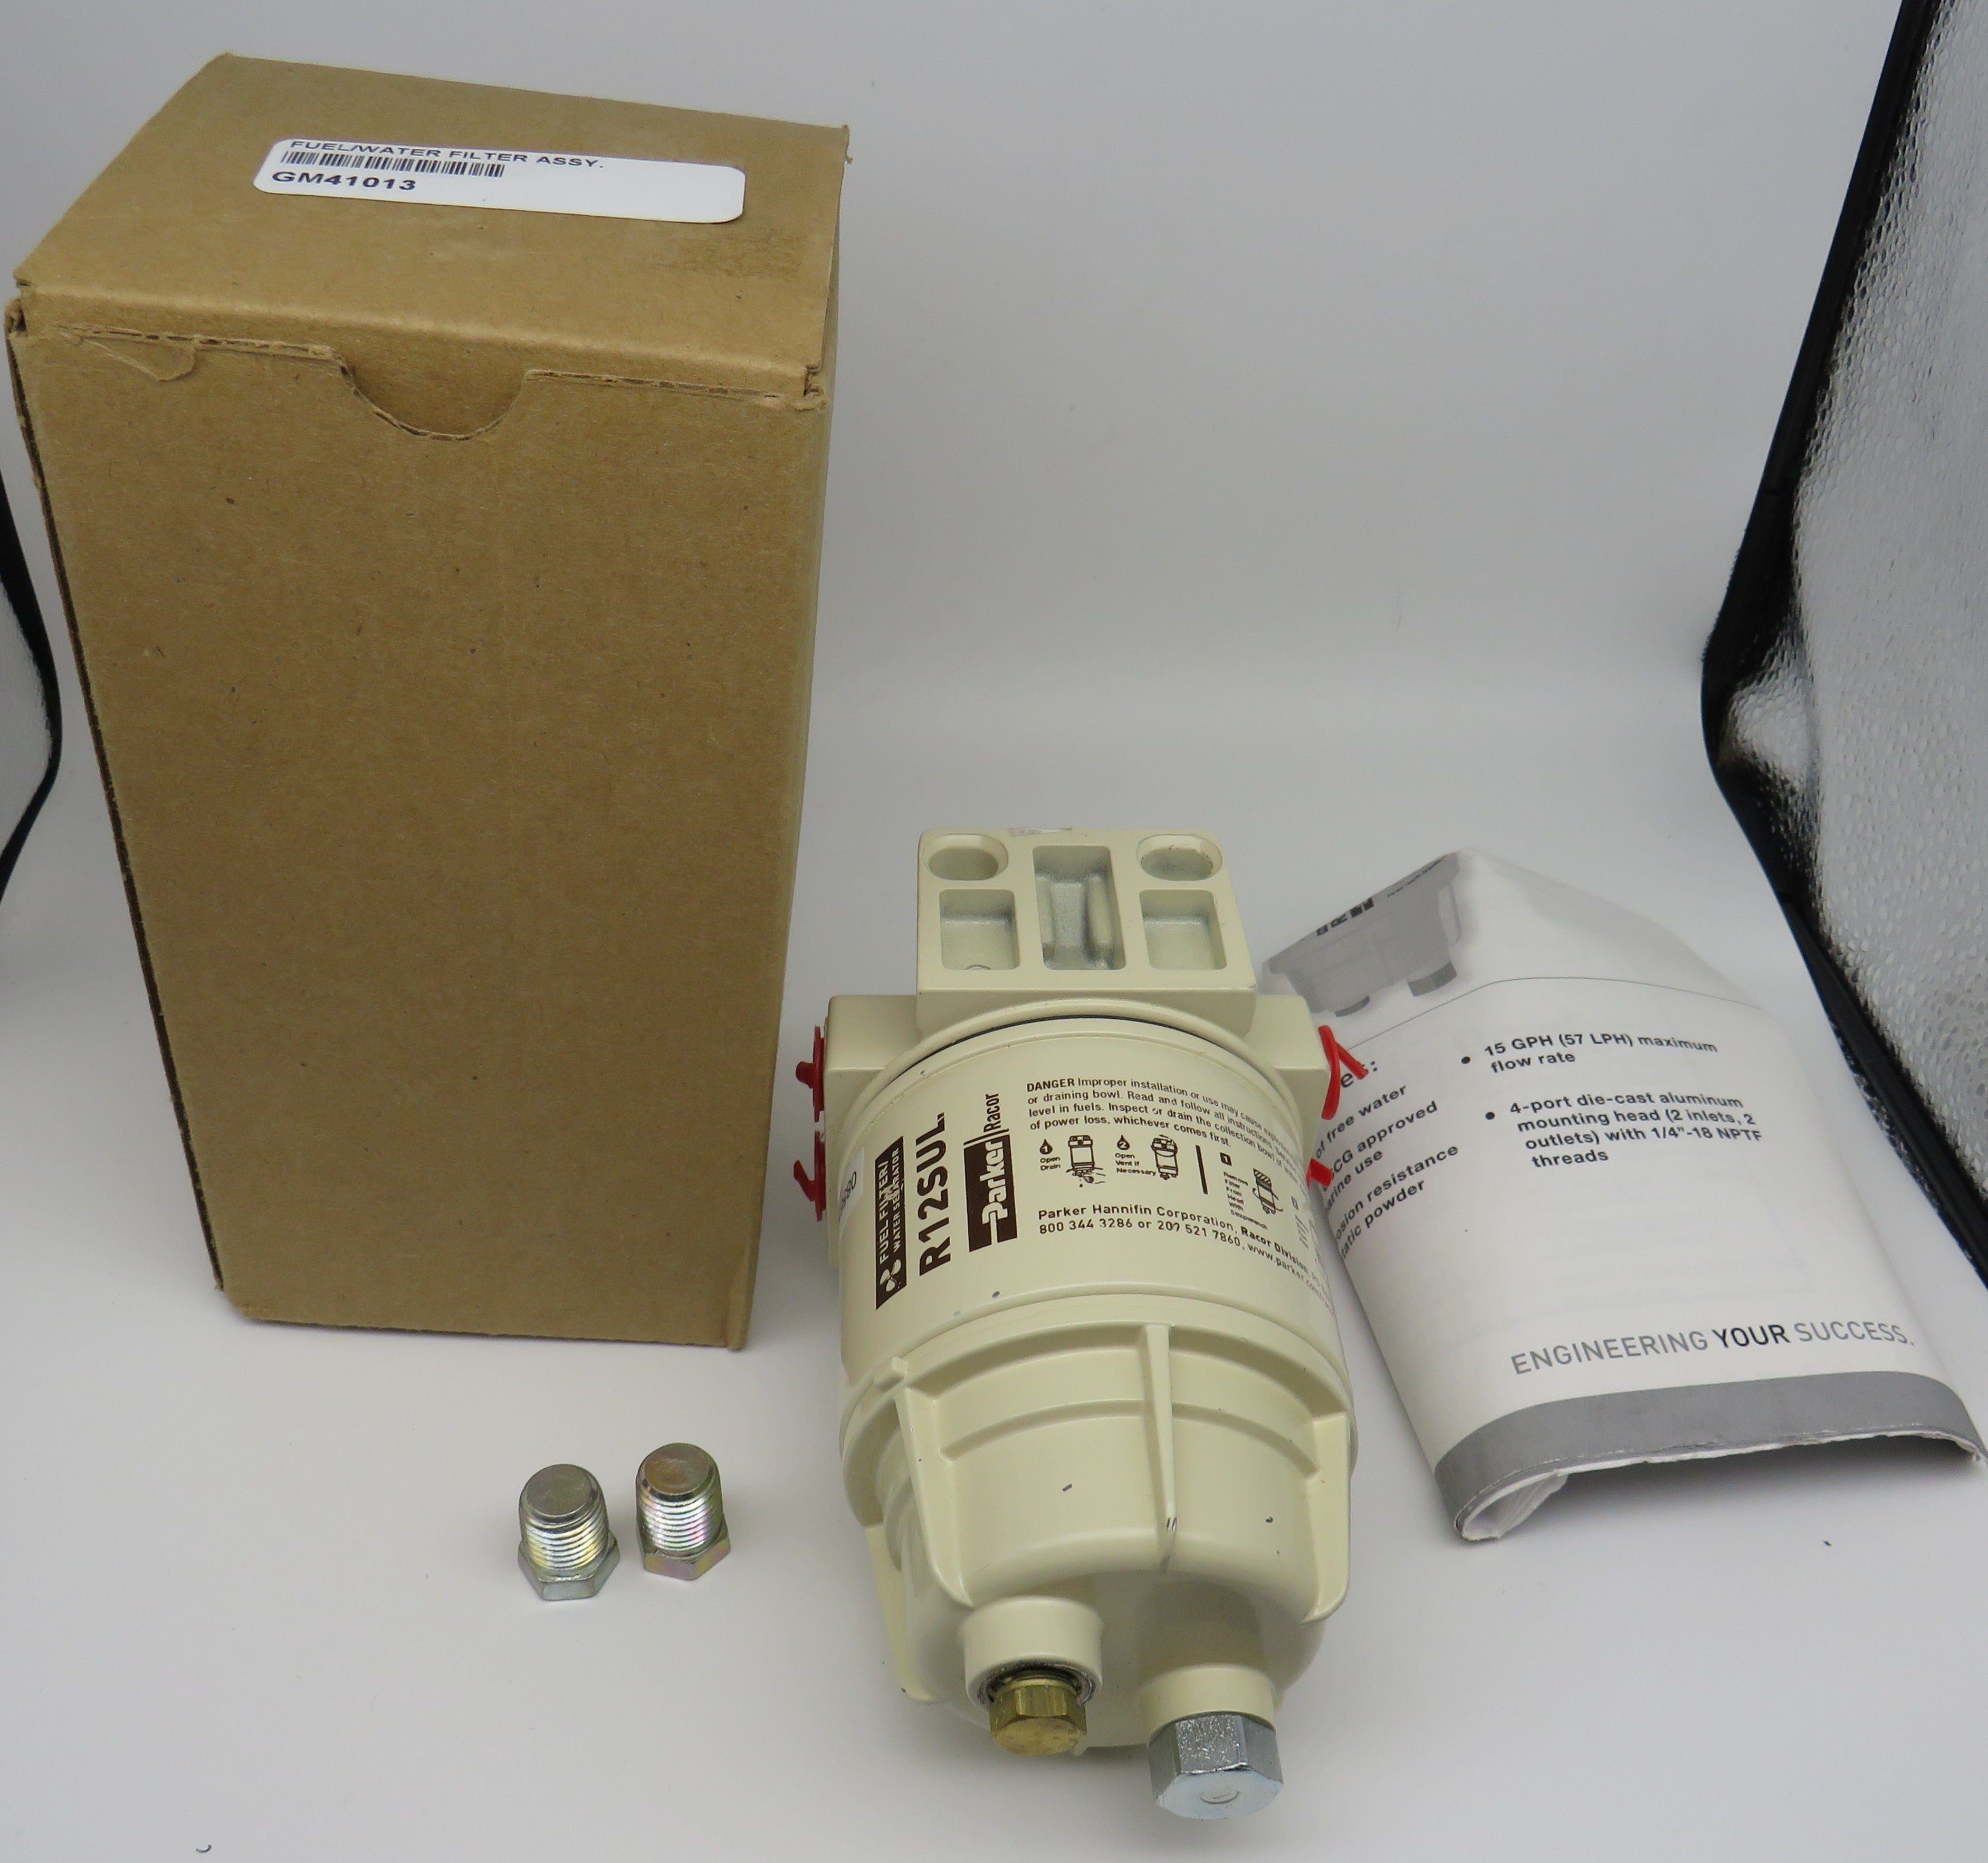 GM41013 Kohler Filter, Fuel/Water Separator